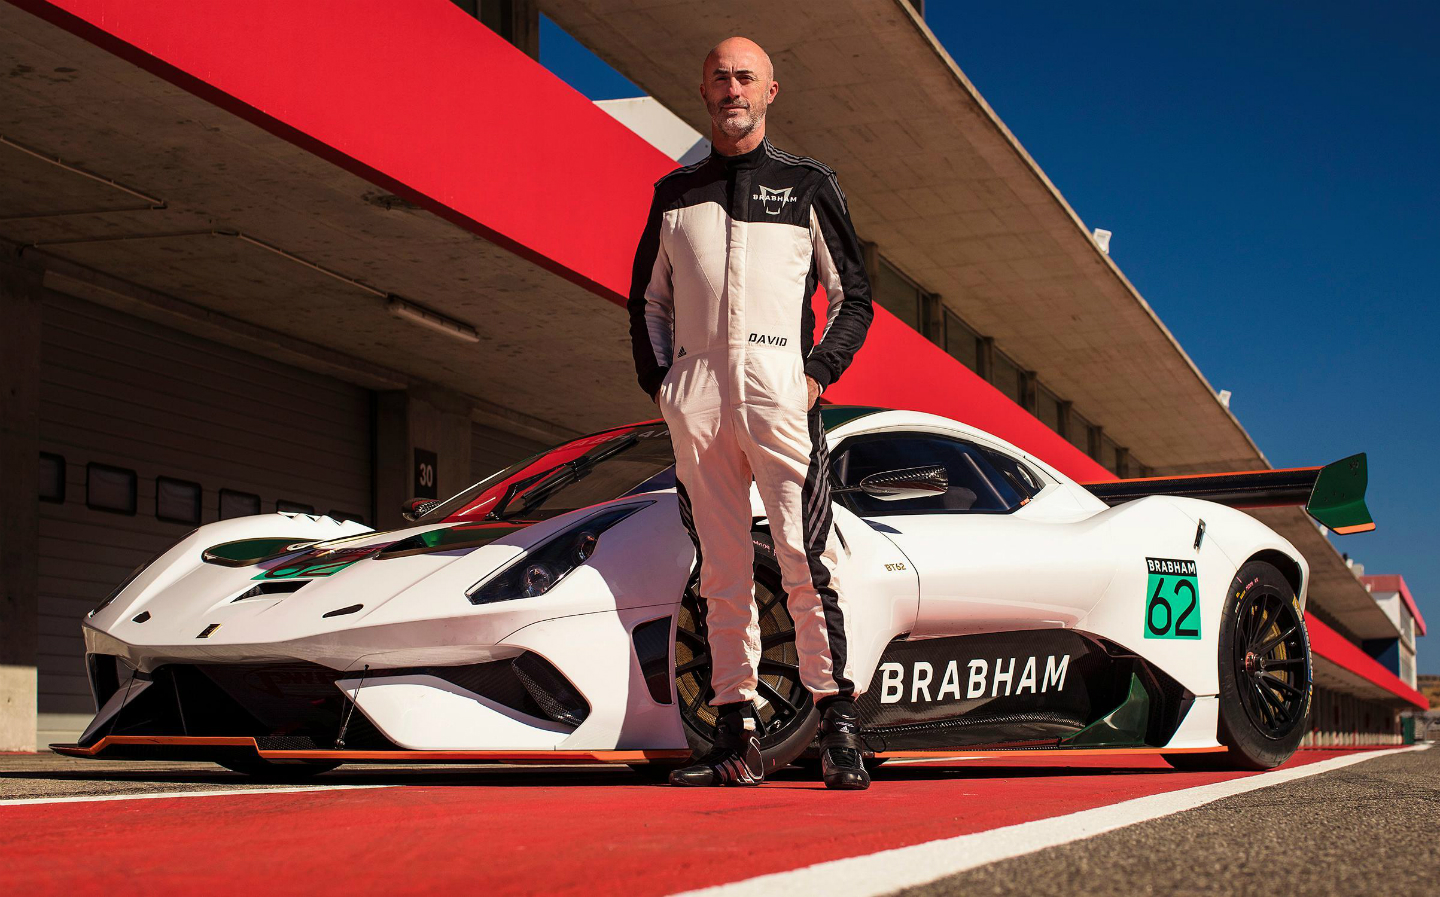 Me and My Motor: David Brabham